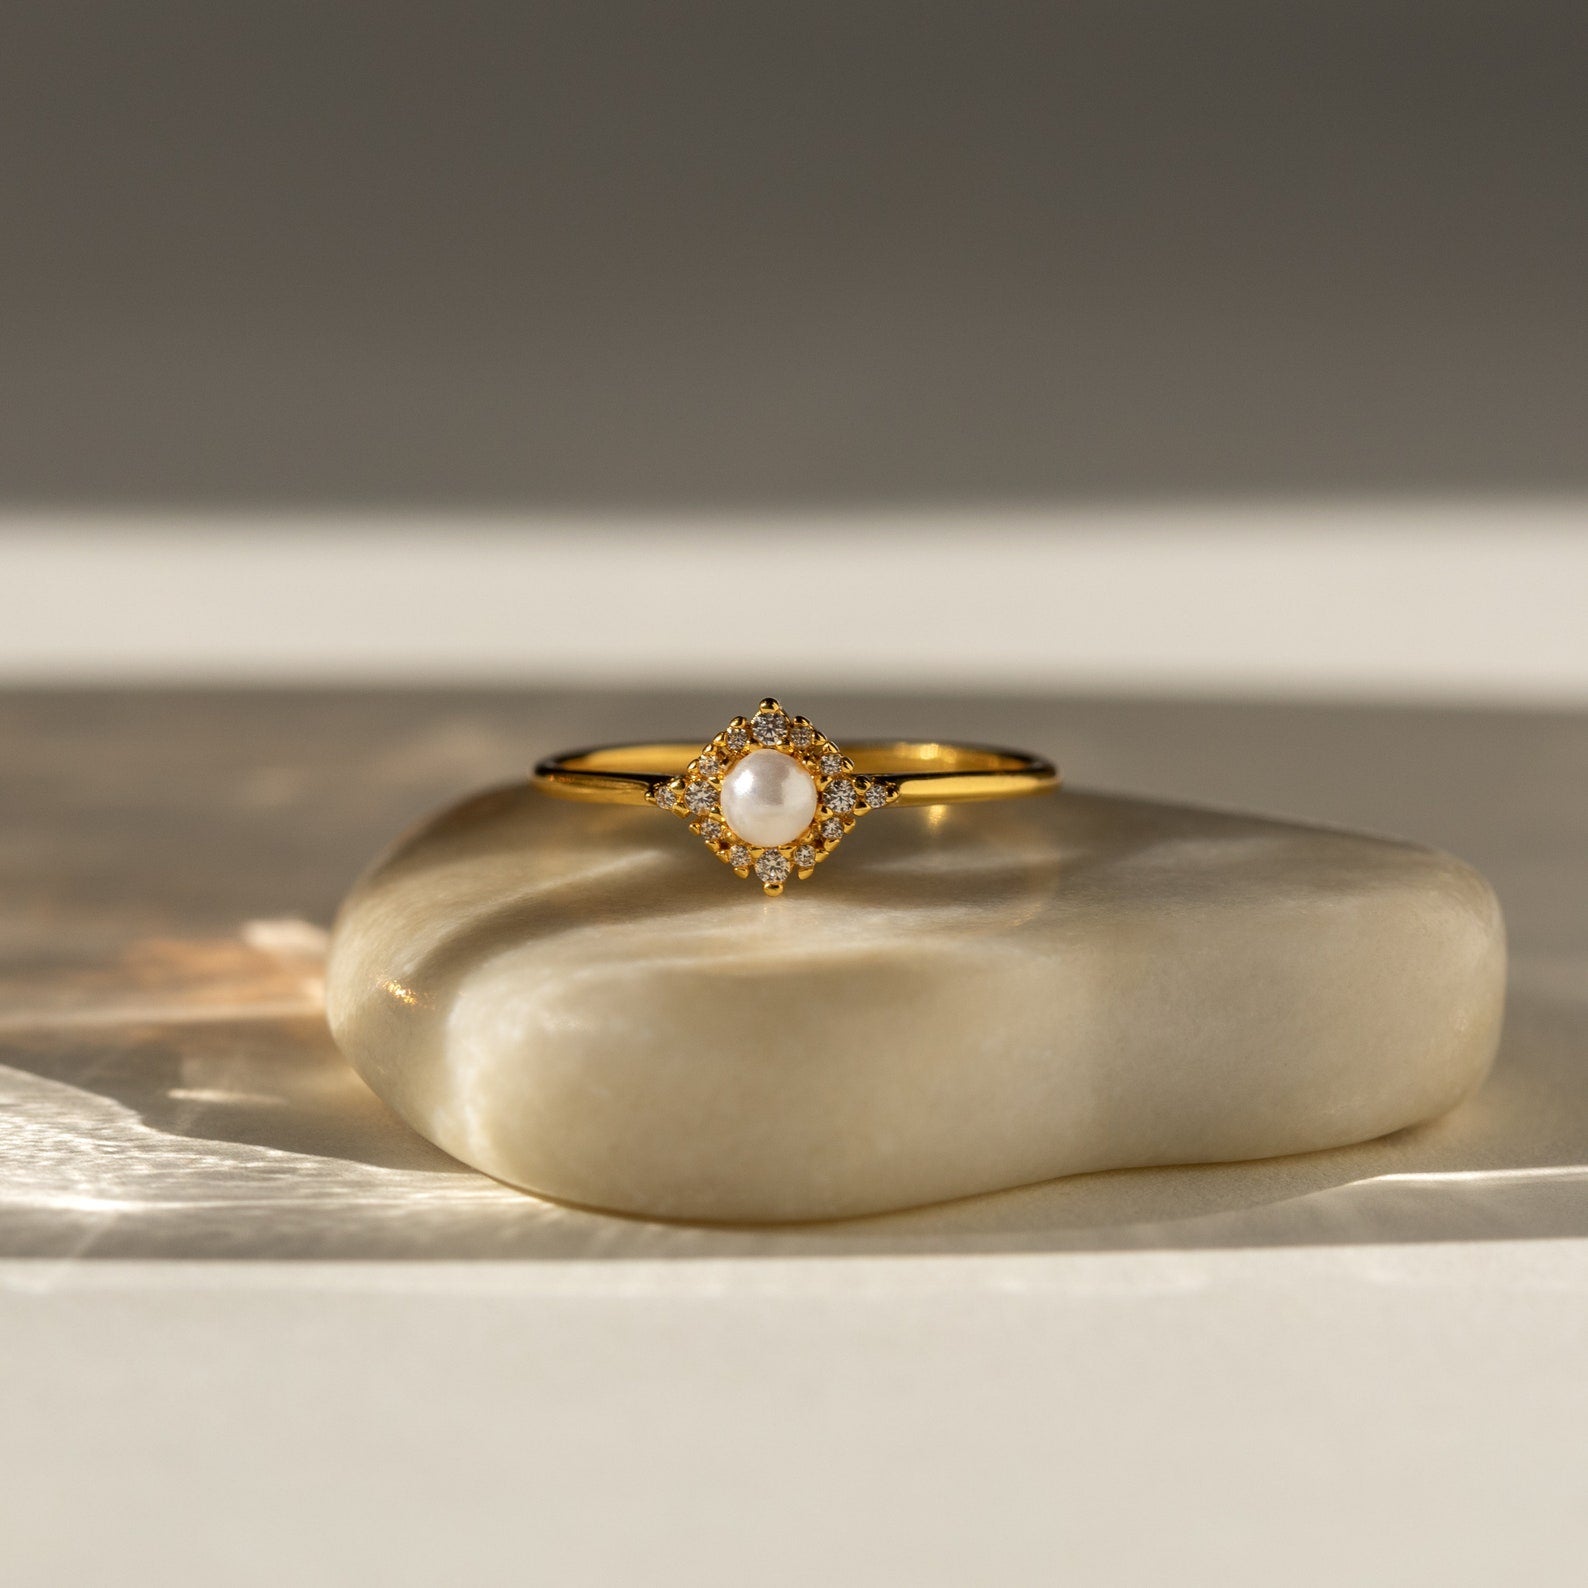 Vintage Pave Pearl Ring